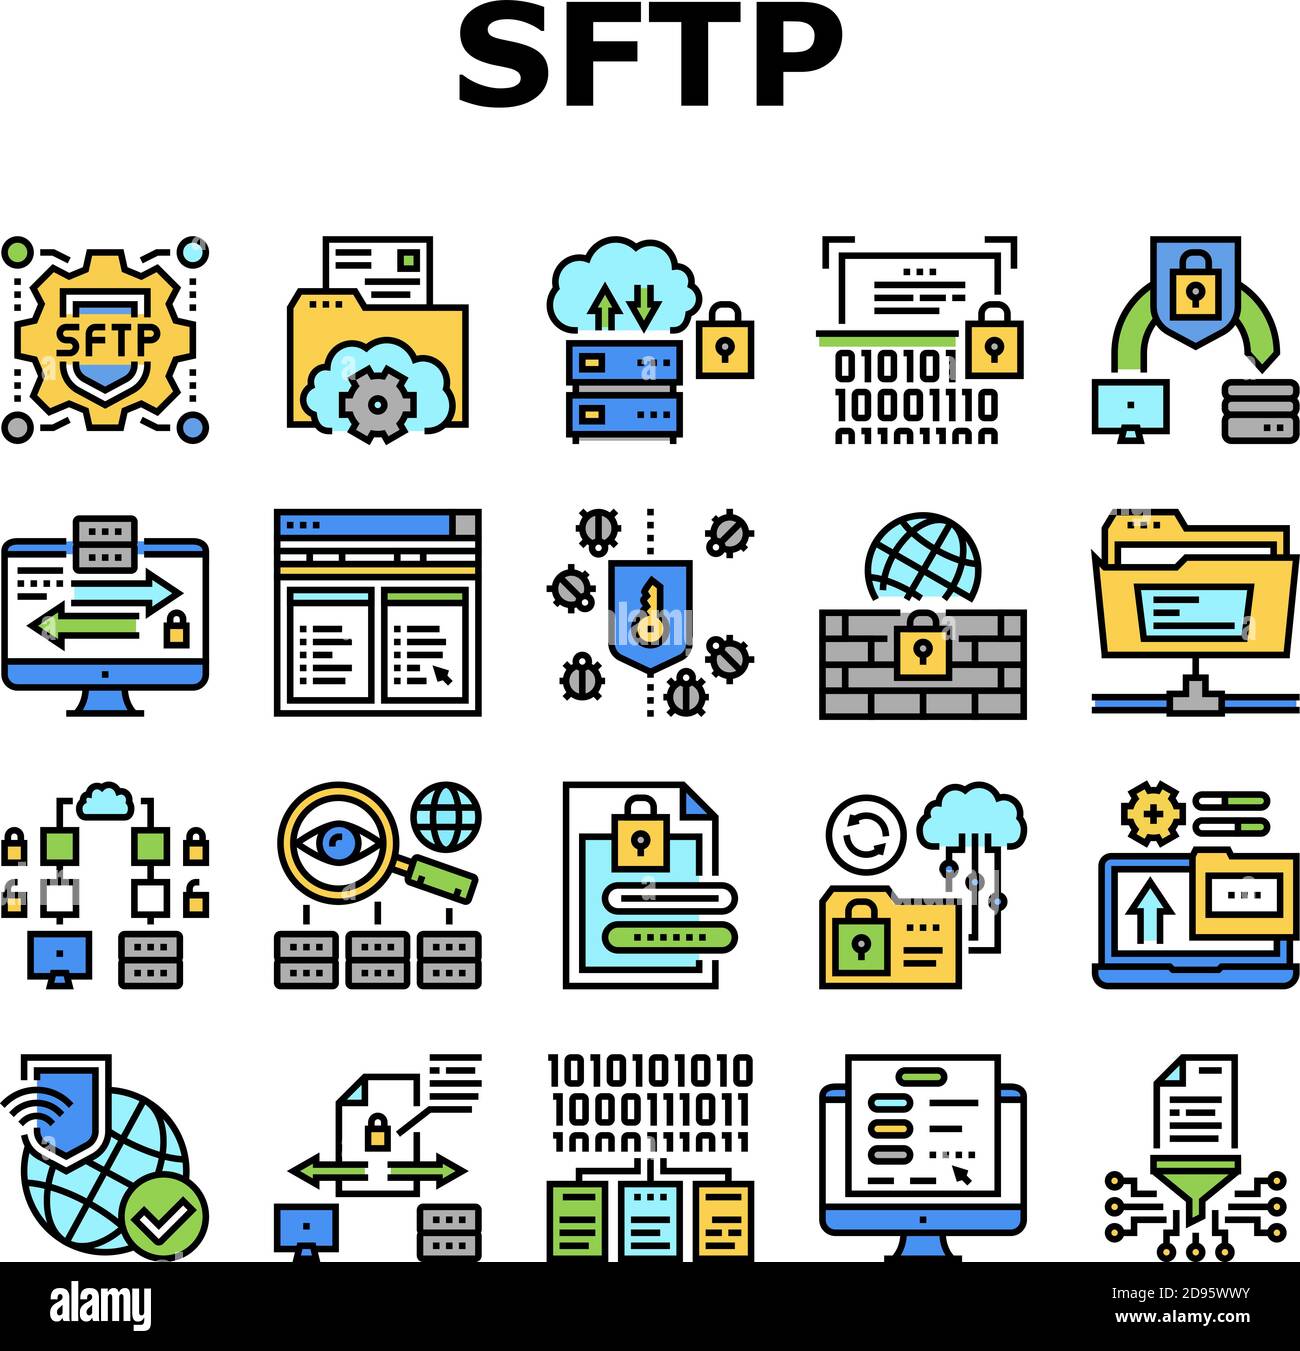 SSH, SFTP Protocolo de transferencia de archivos iconos establecer vector  Imagen Vector de stock - Alamy